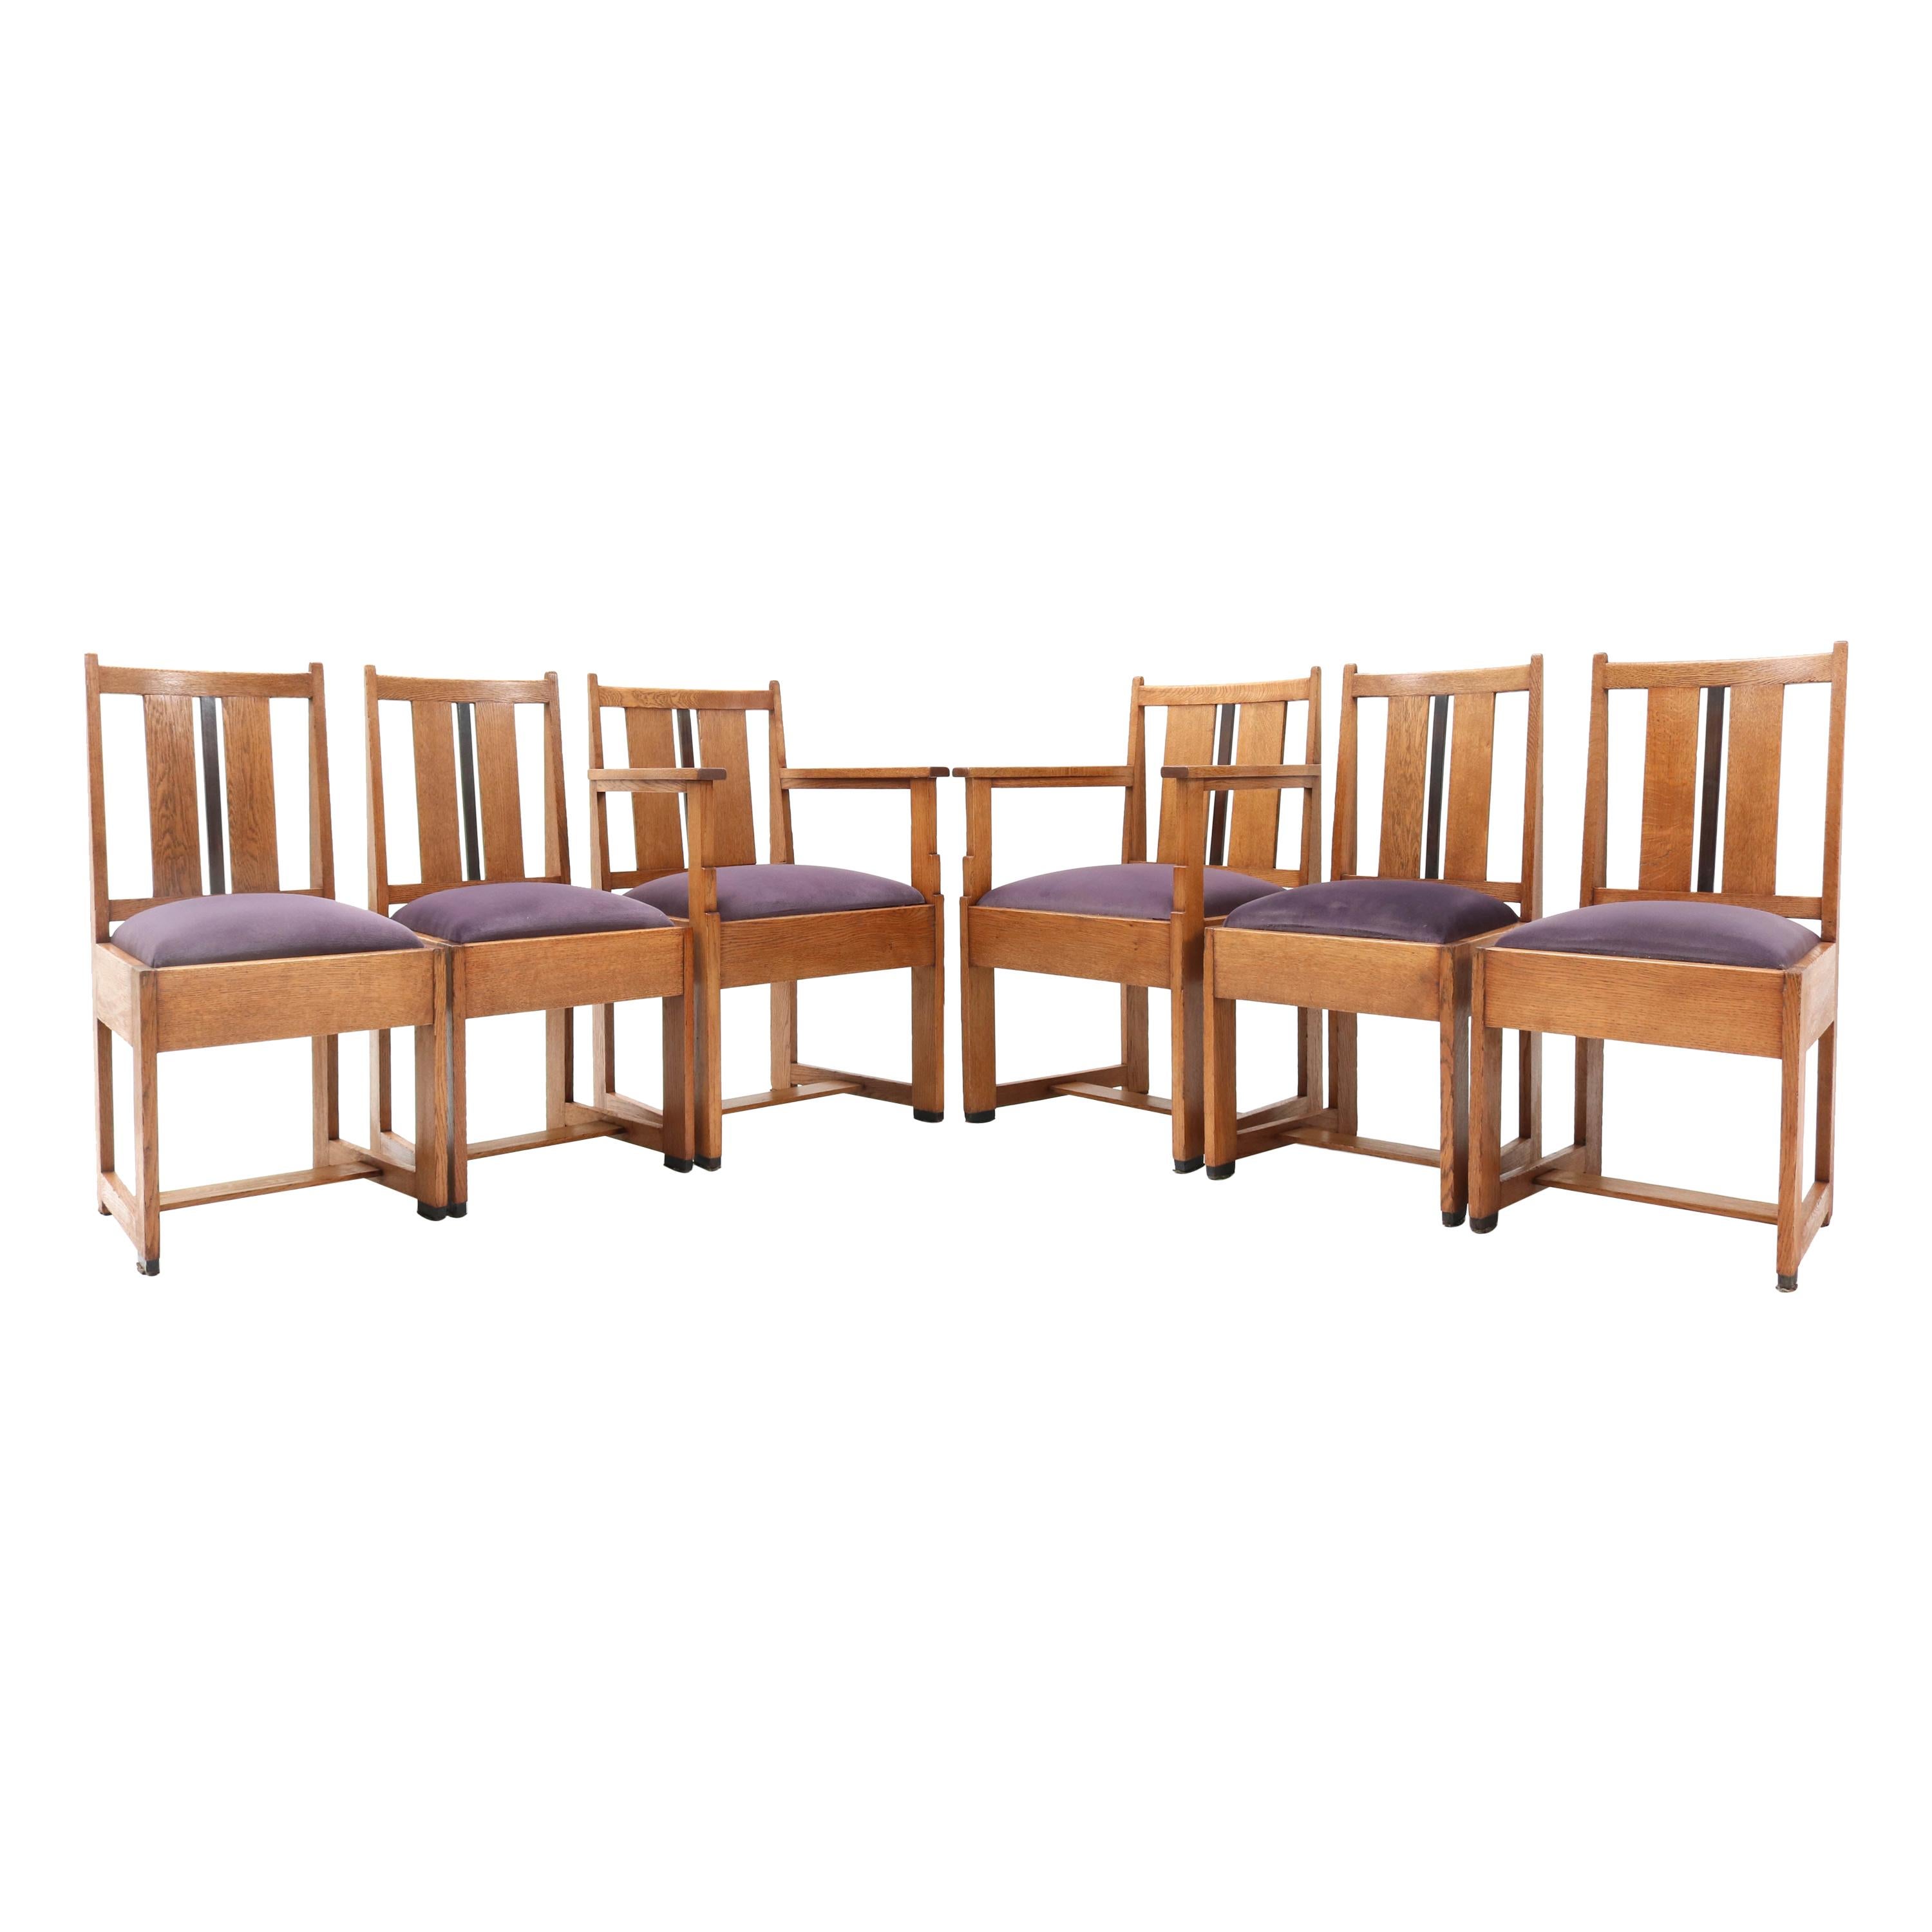 Six Oak Art Deco Haagse School Dining Room Chairs, 1920s